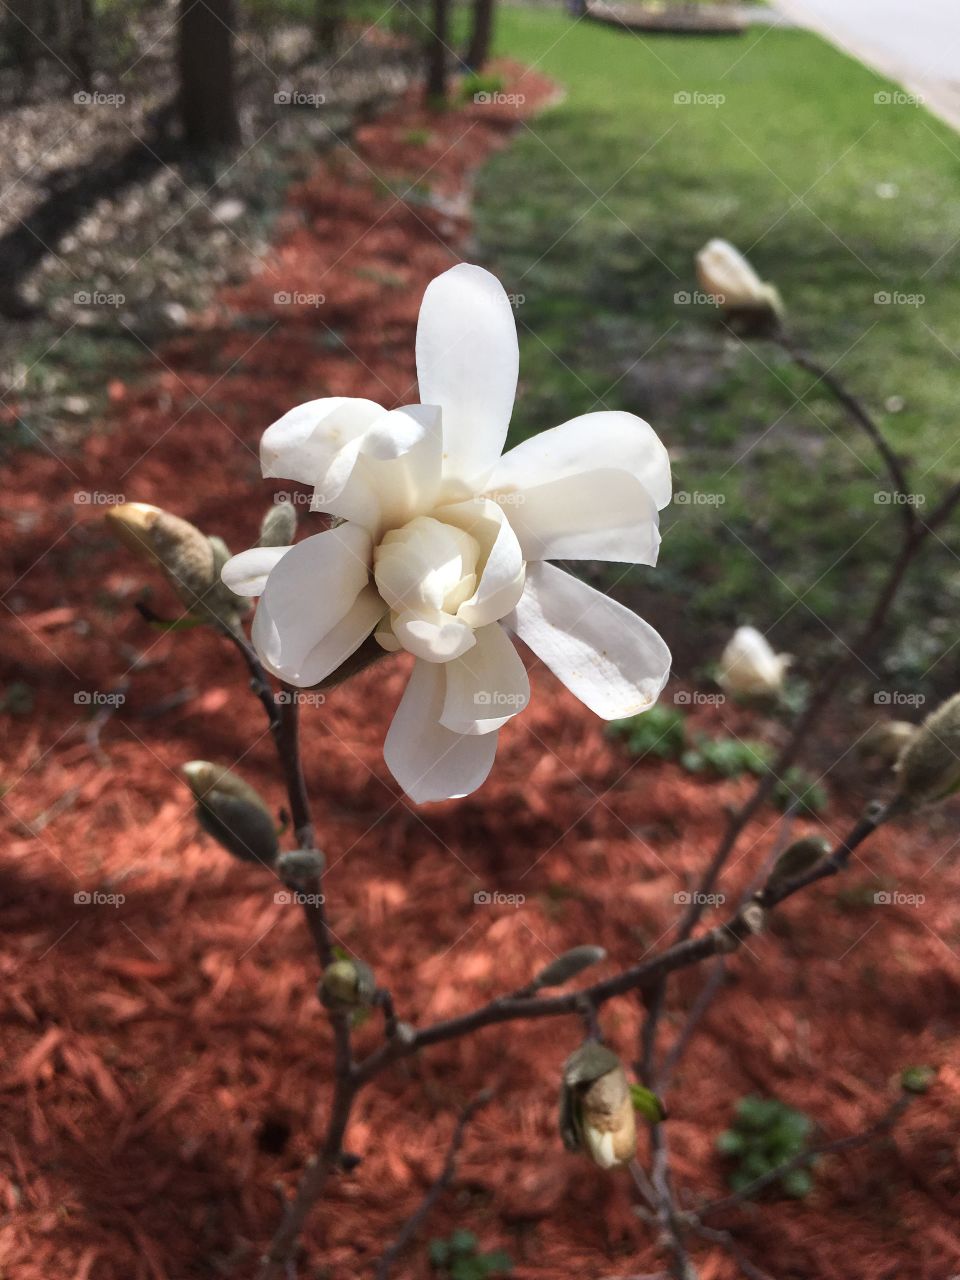 Magnolia 1 year